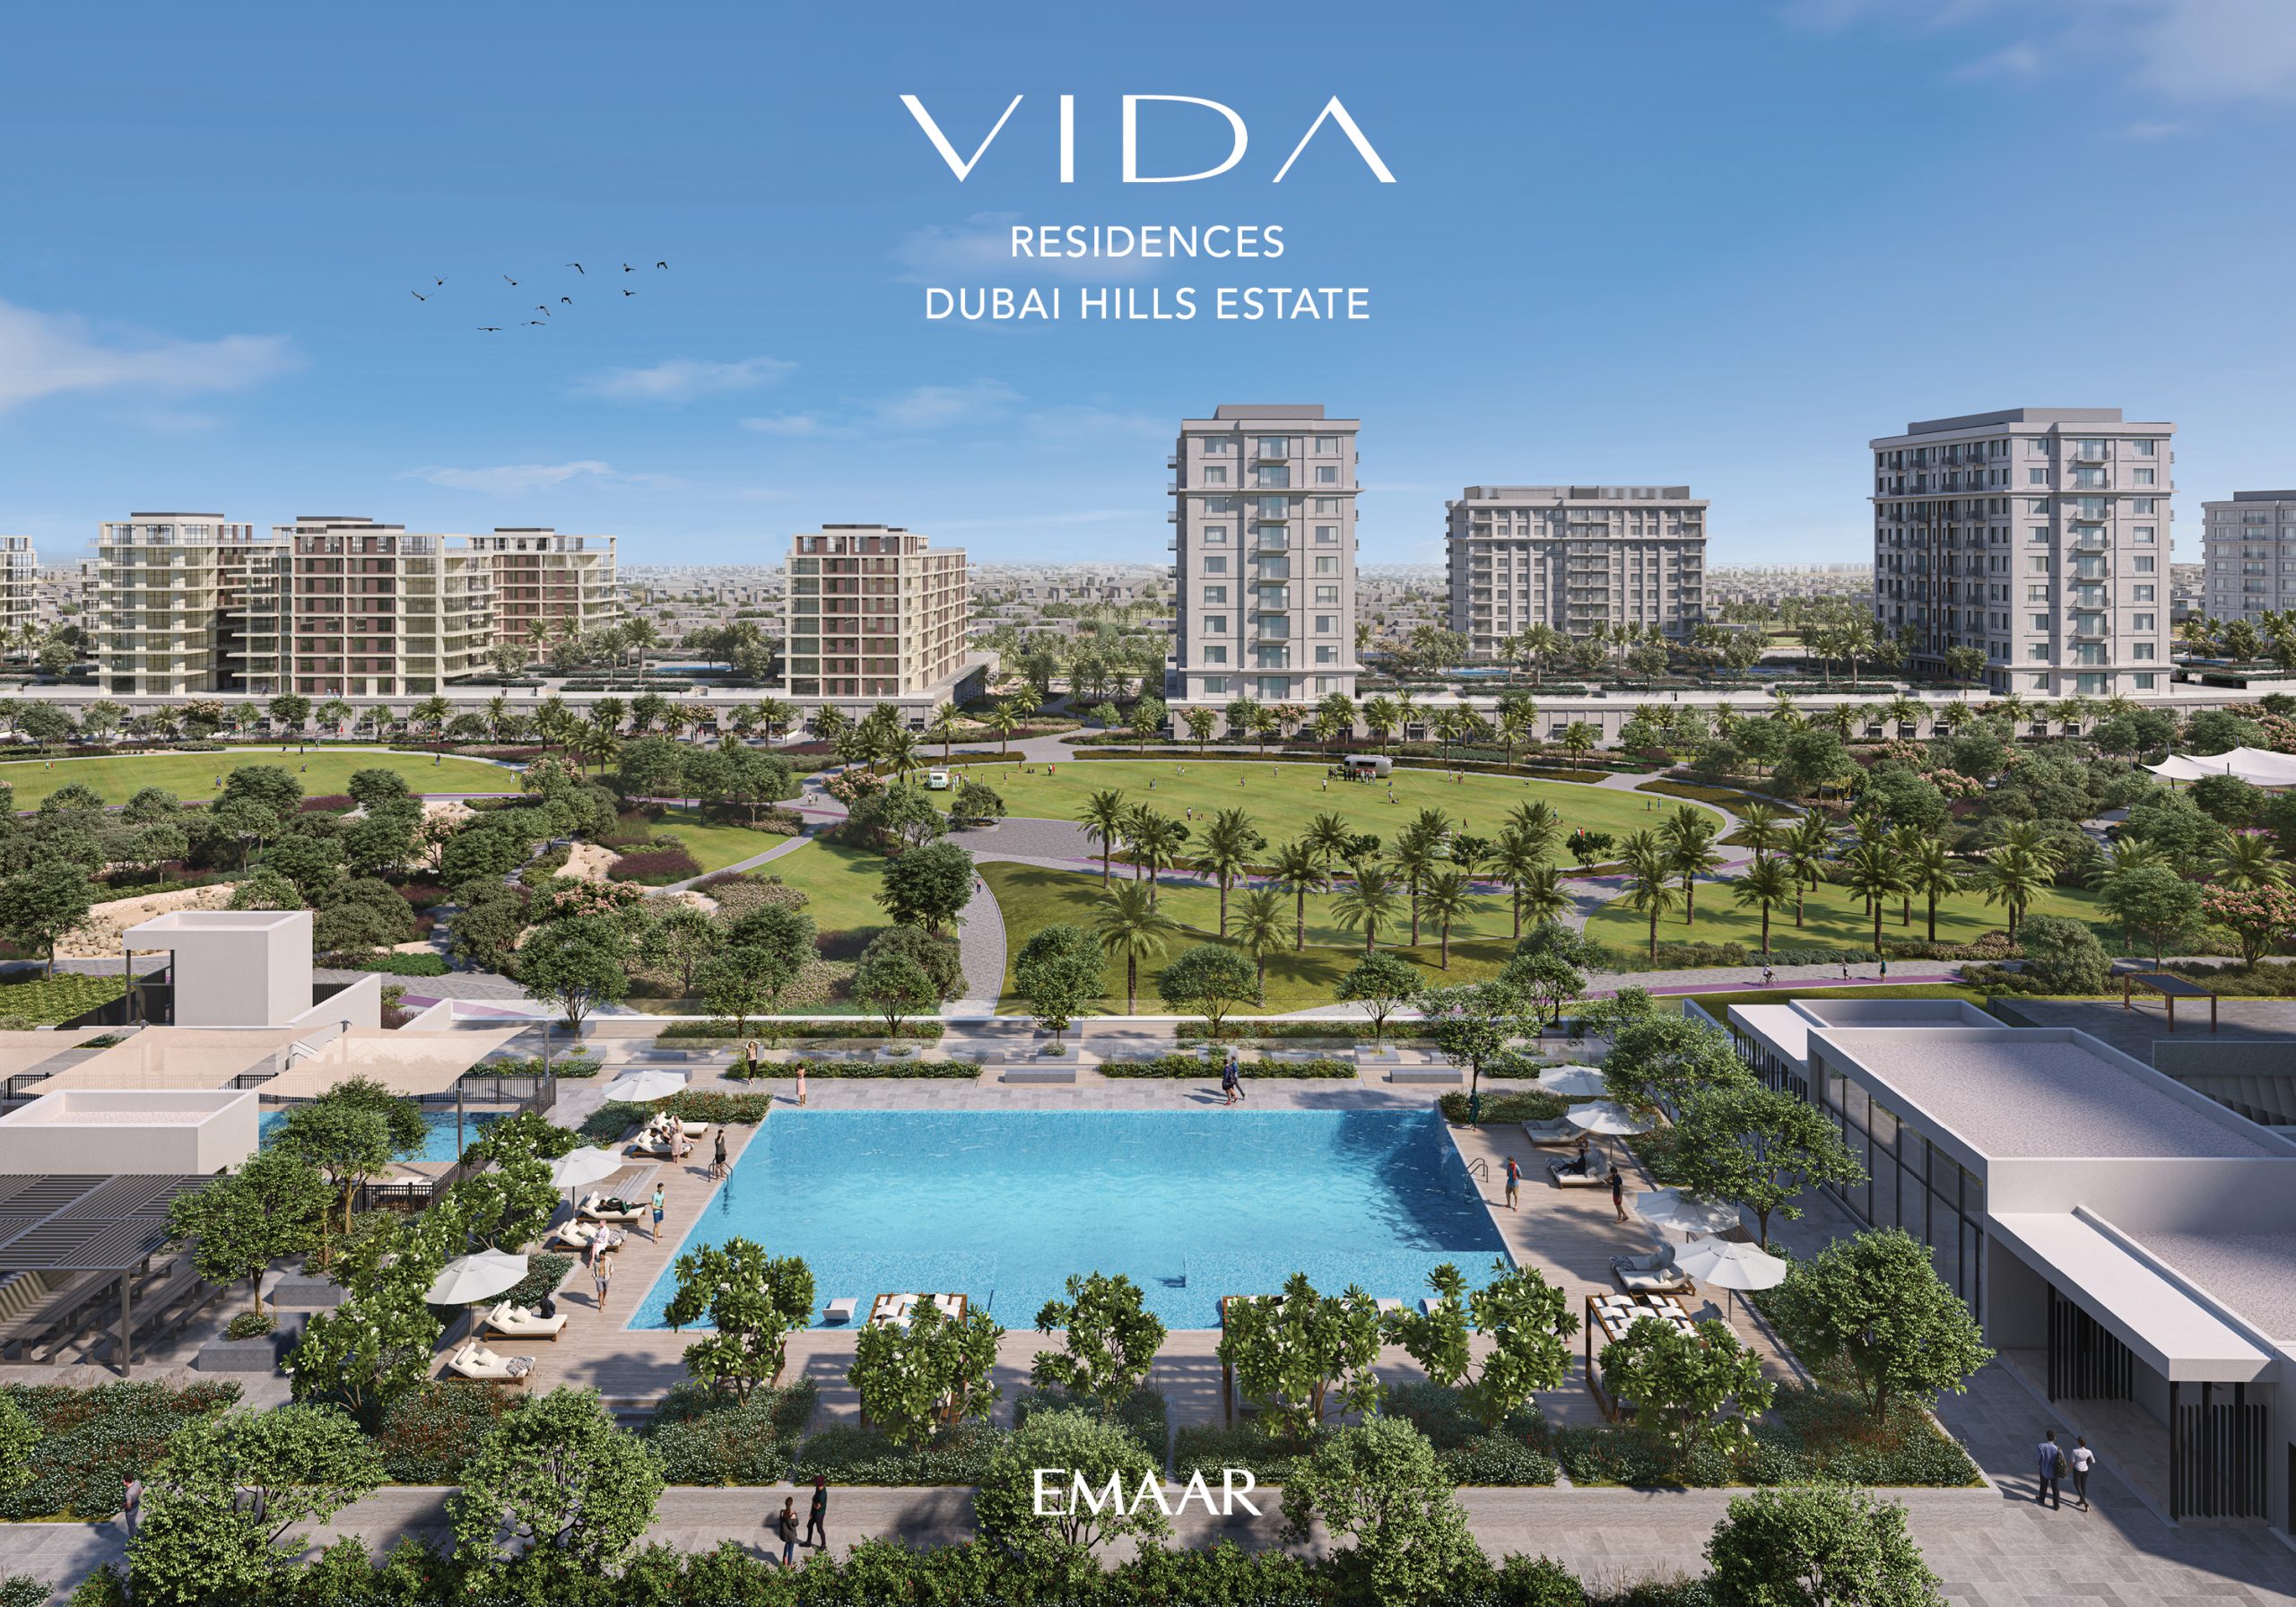 Vida Residences At Dubai Hills By Emaar